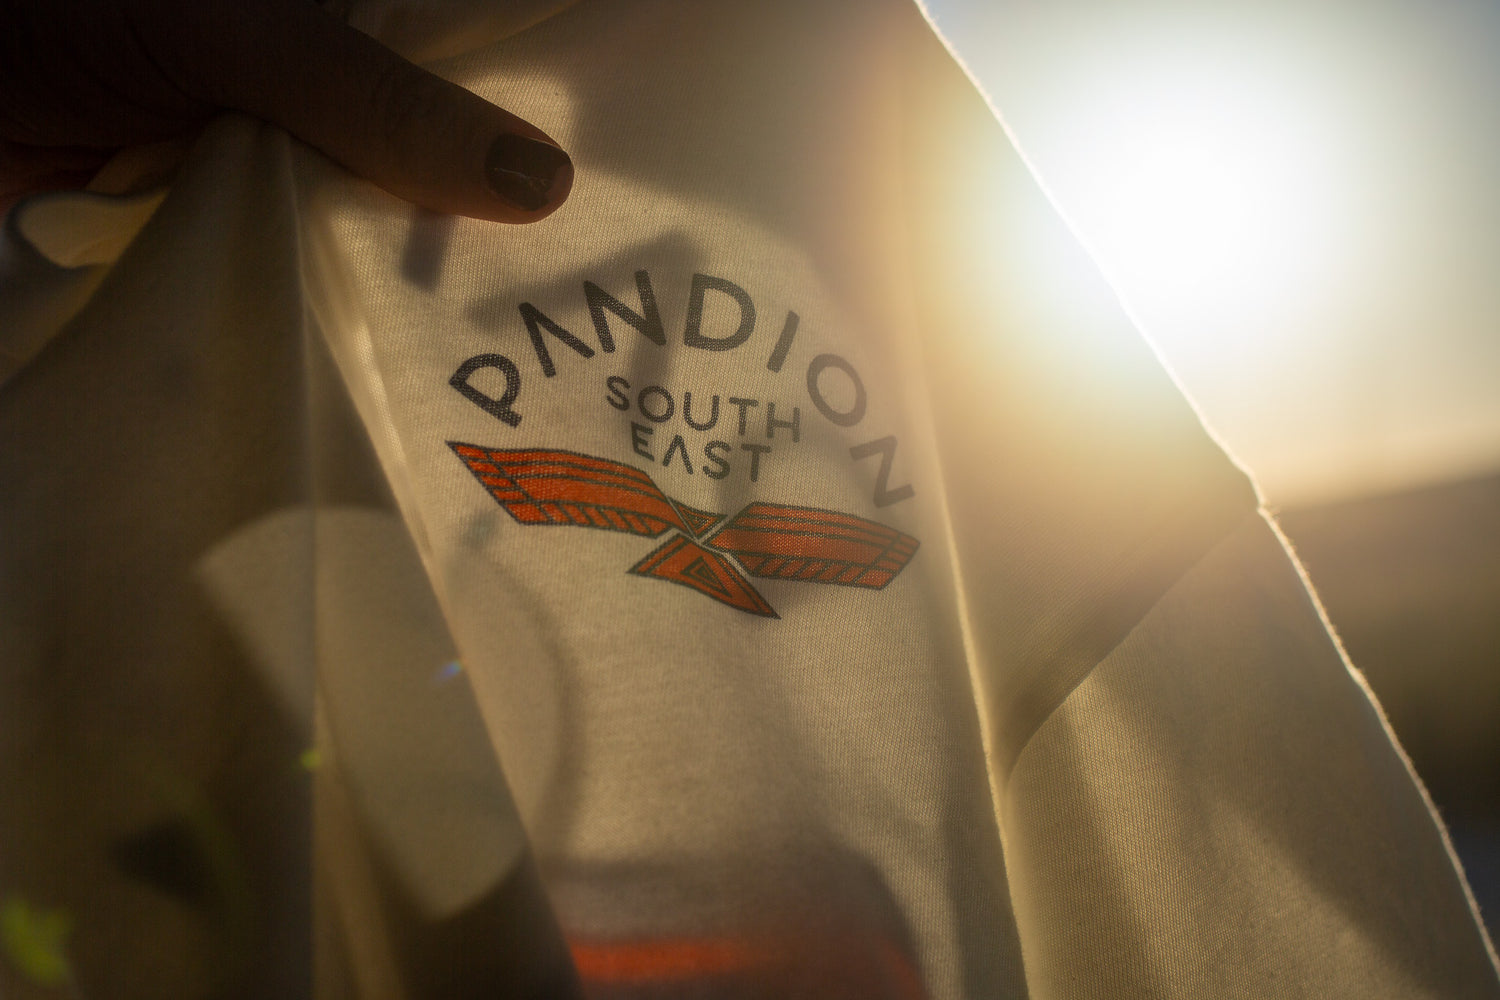 pandion southeast logo on tee in sunshine